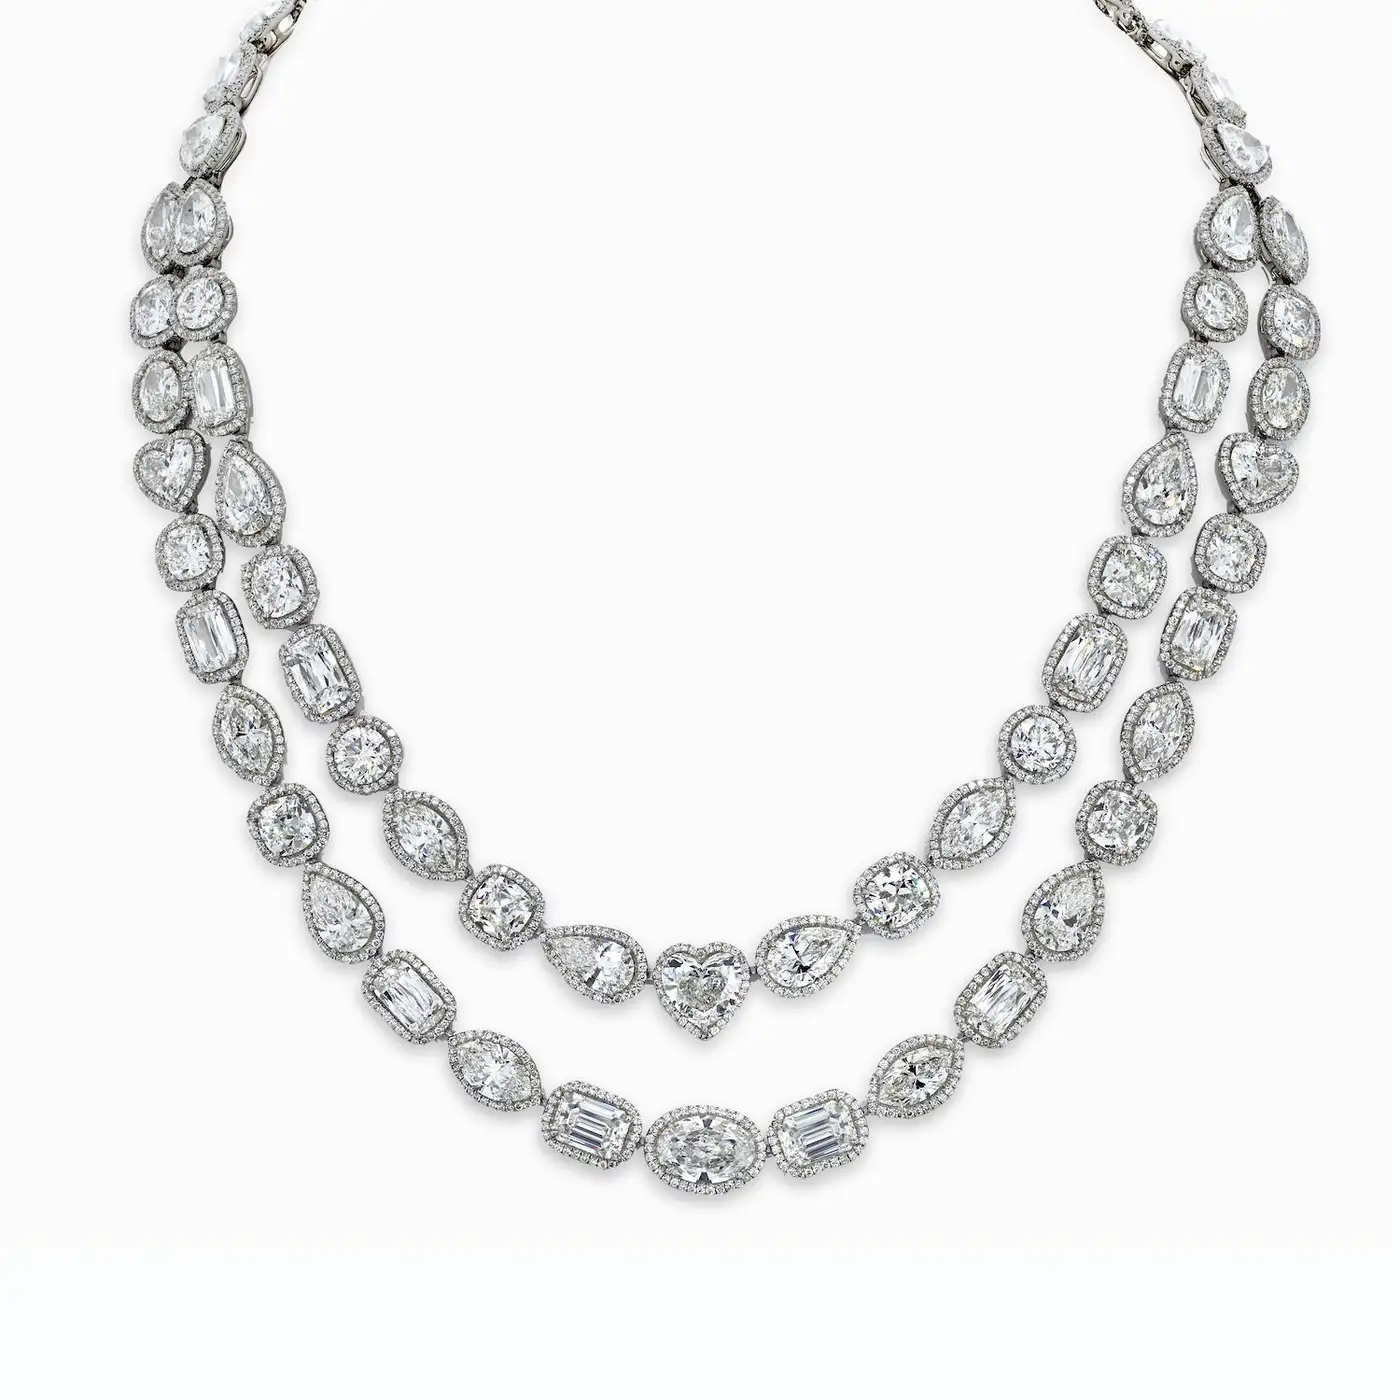 William-Goldberg-63-Carat-Spectacular-Diamond-Infinity-Necklace-4.webp